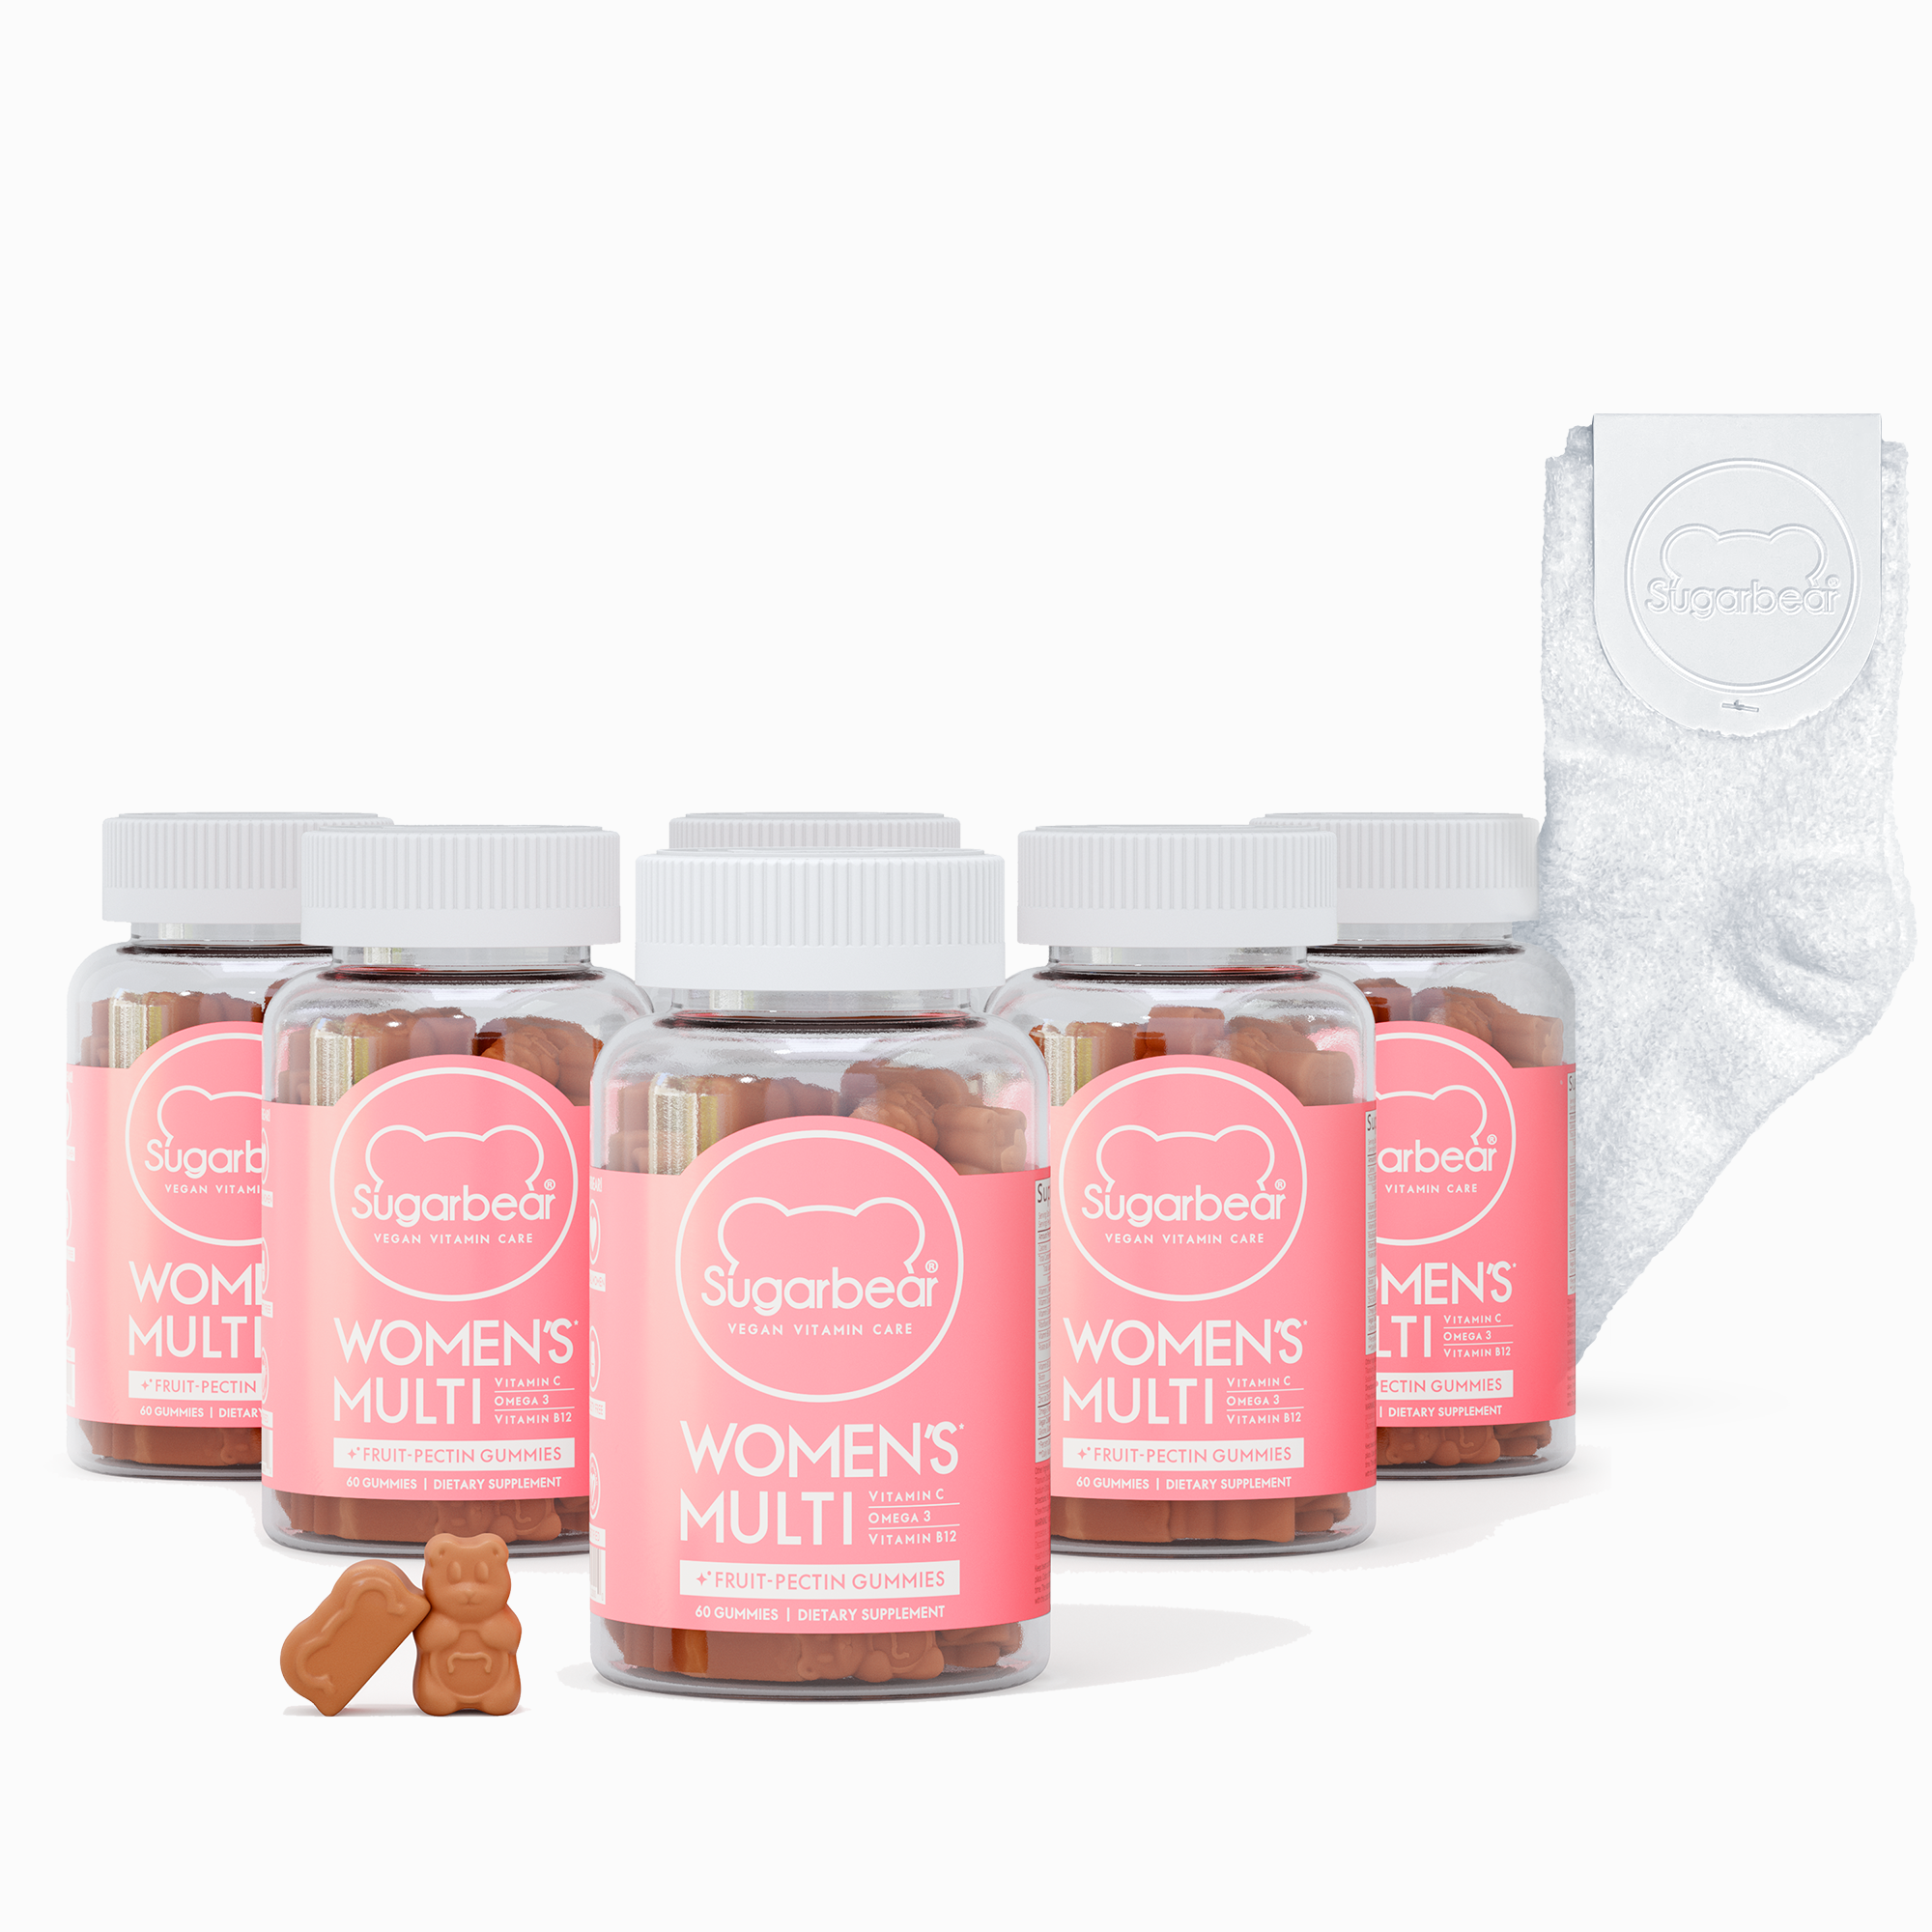 Sugarbear Women's Multi Vitamins - Paquete de 6 meses + regalo gratis 